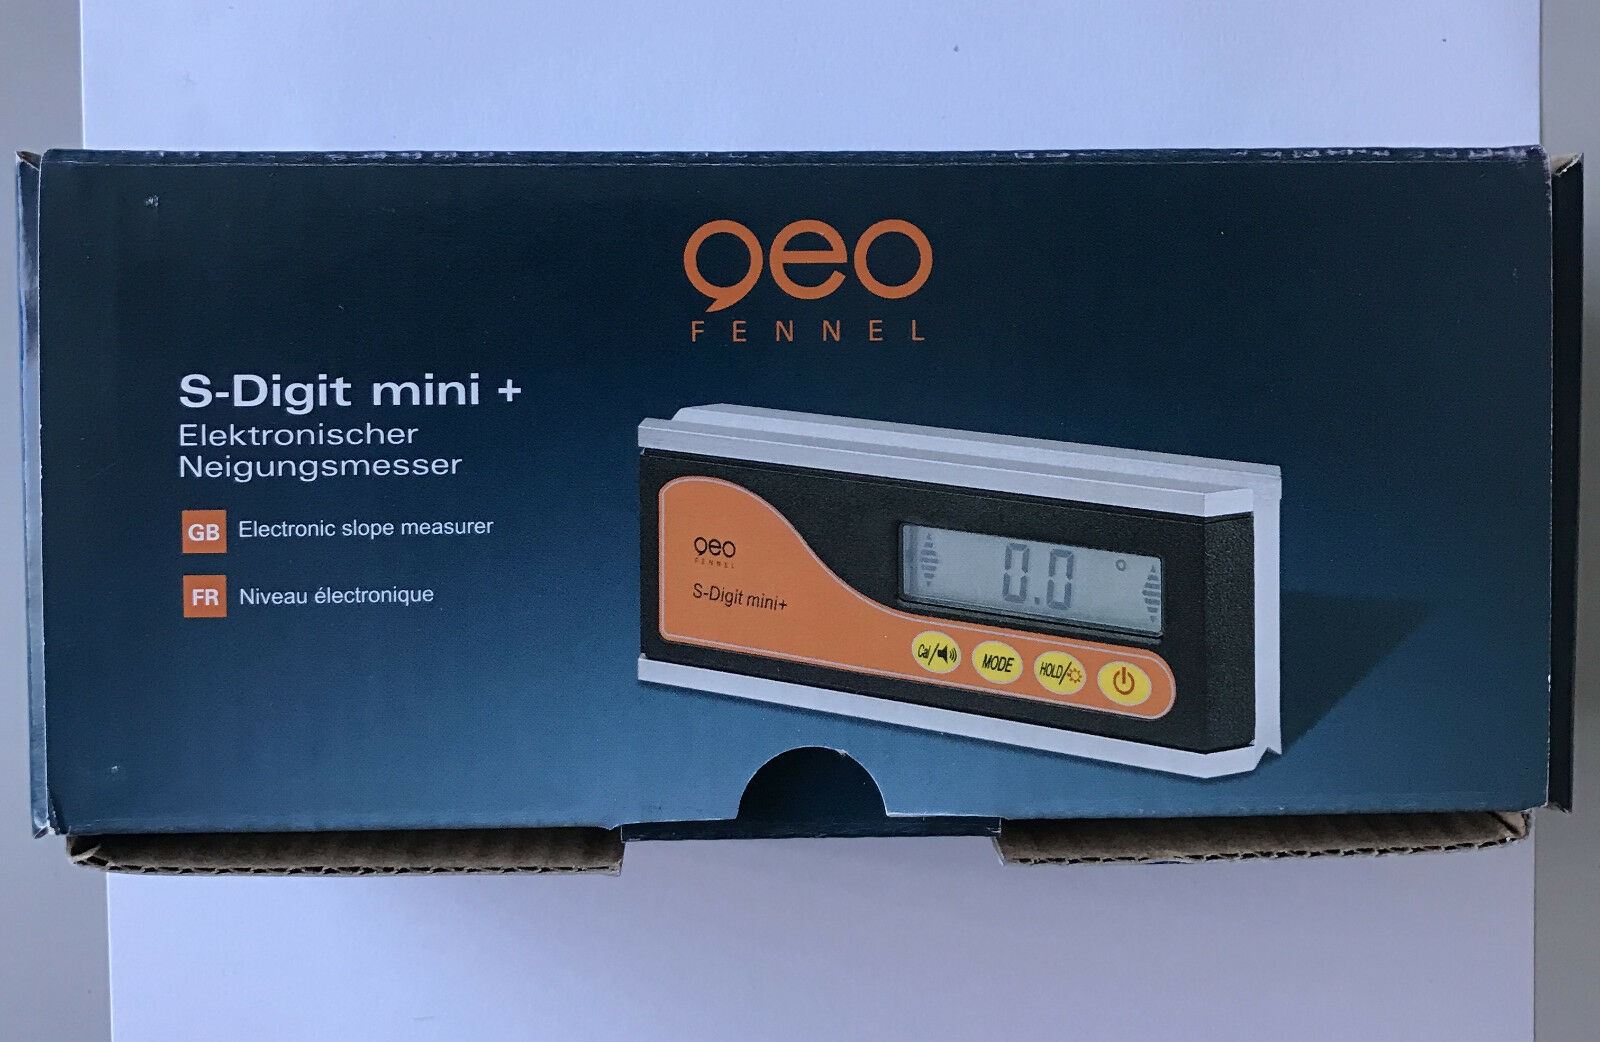 GEO Fennel S-Digit mini + Electronic slope measurer Angle Level Meter